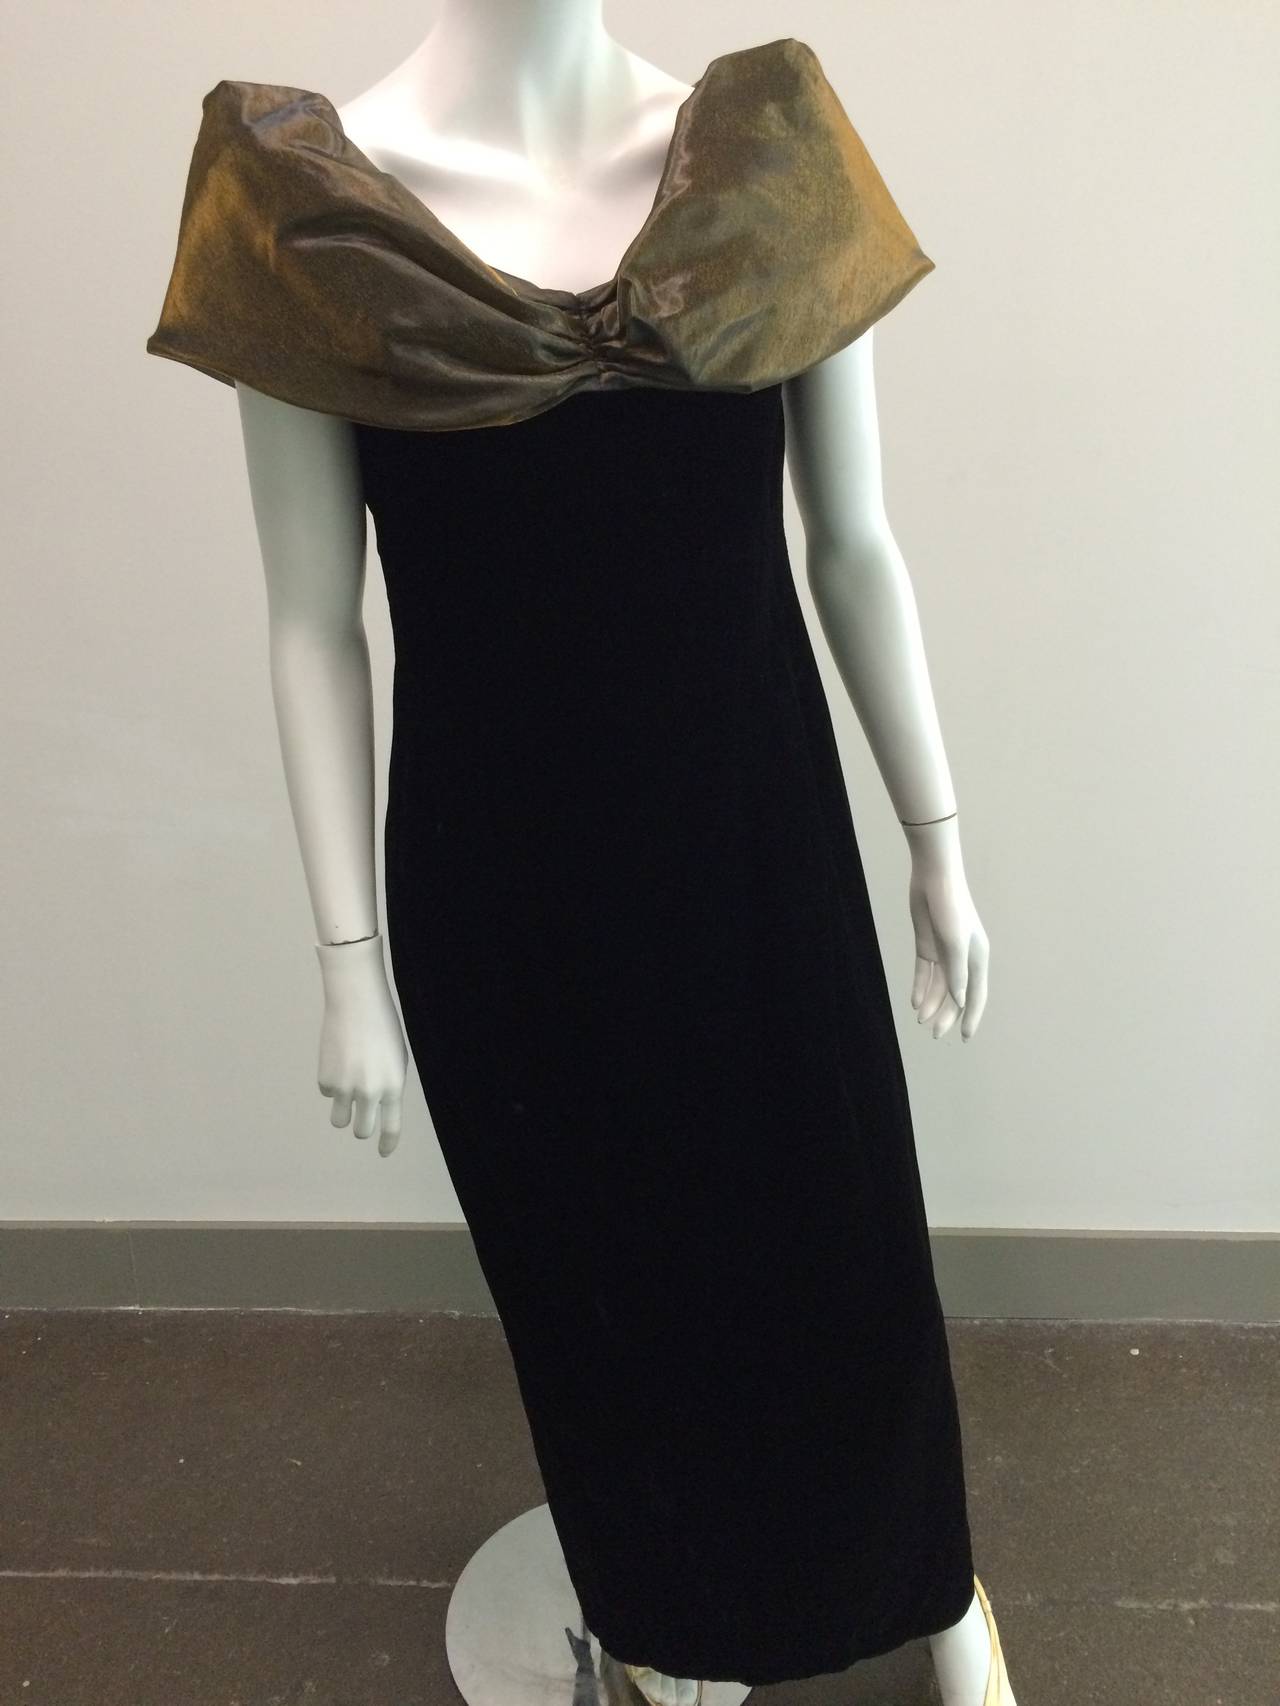 Women's Oscar de la Renta for Sak's Fifth Avenue 90s long velvet gown.